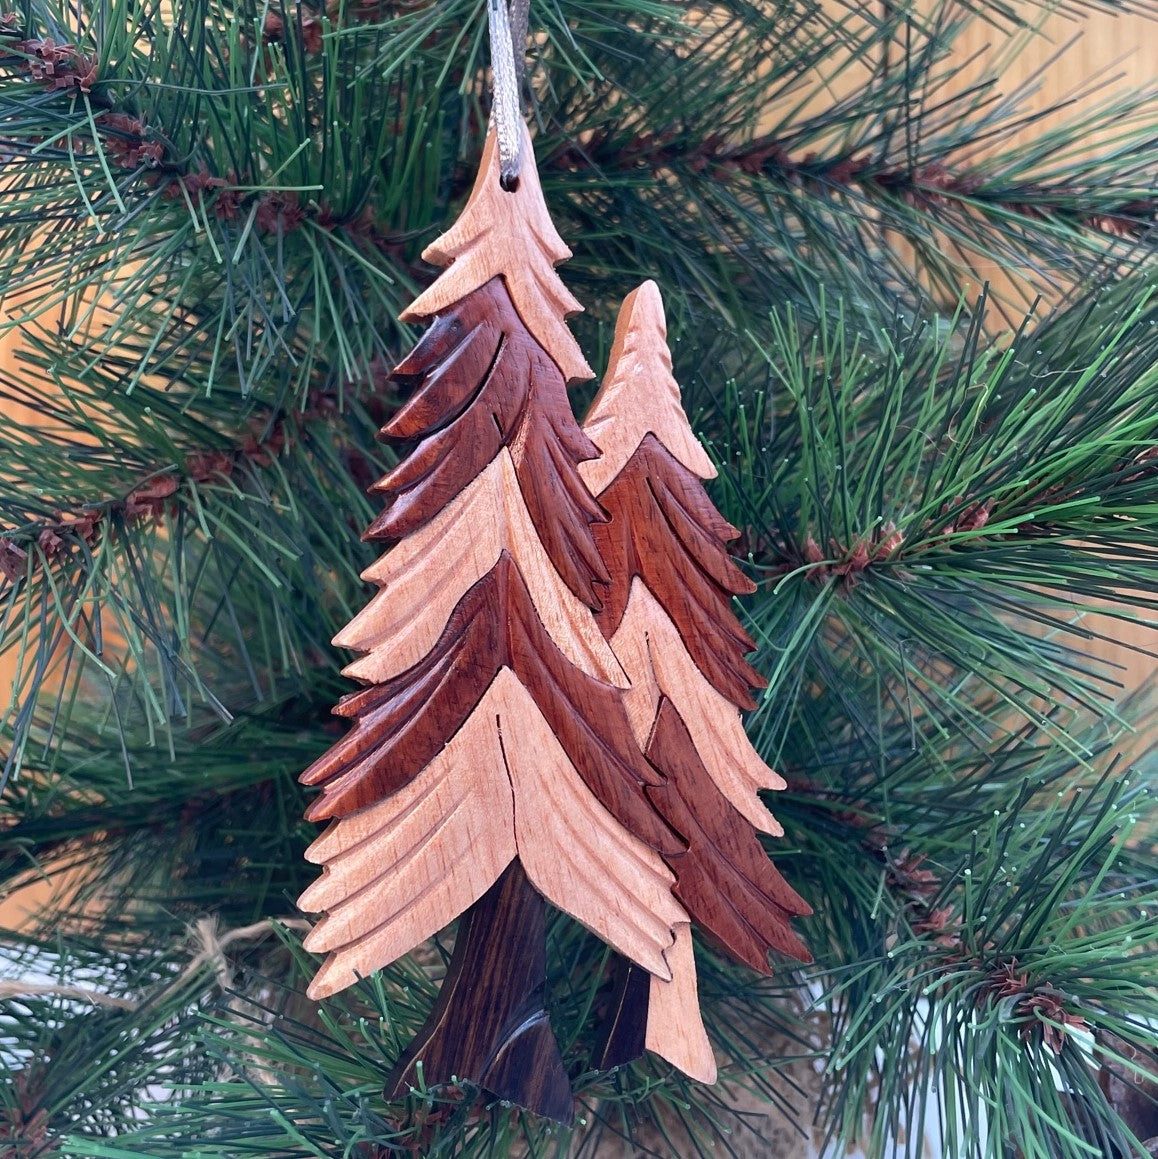 Pine Trees Intarsia Wood Ornament